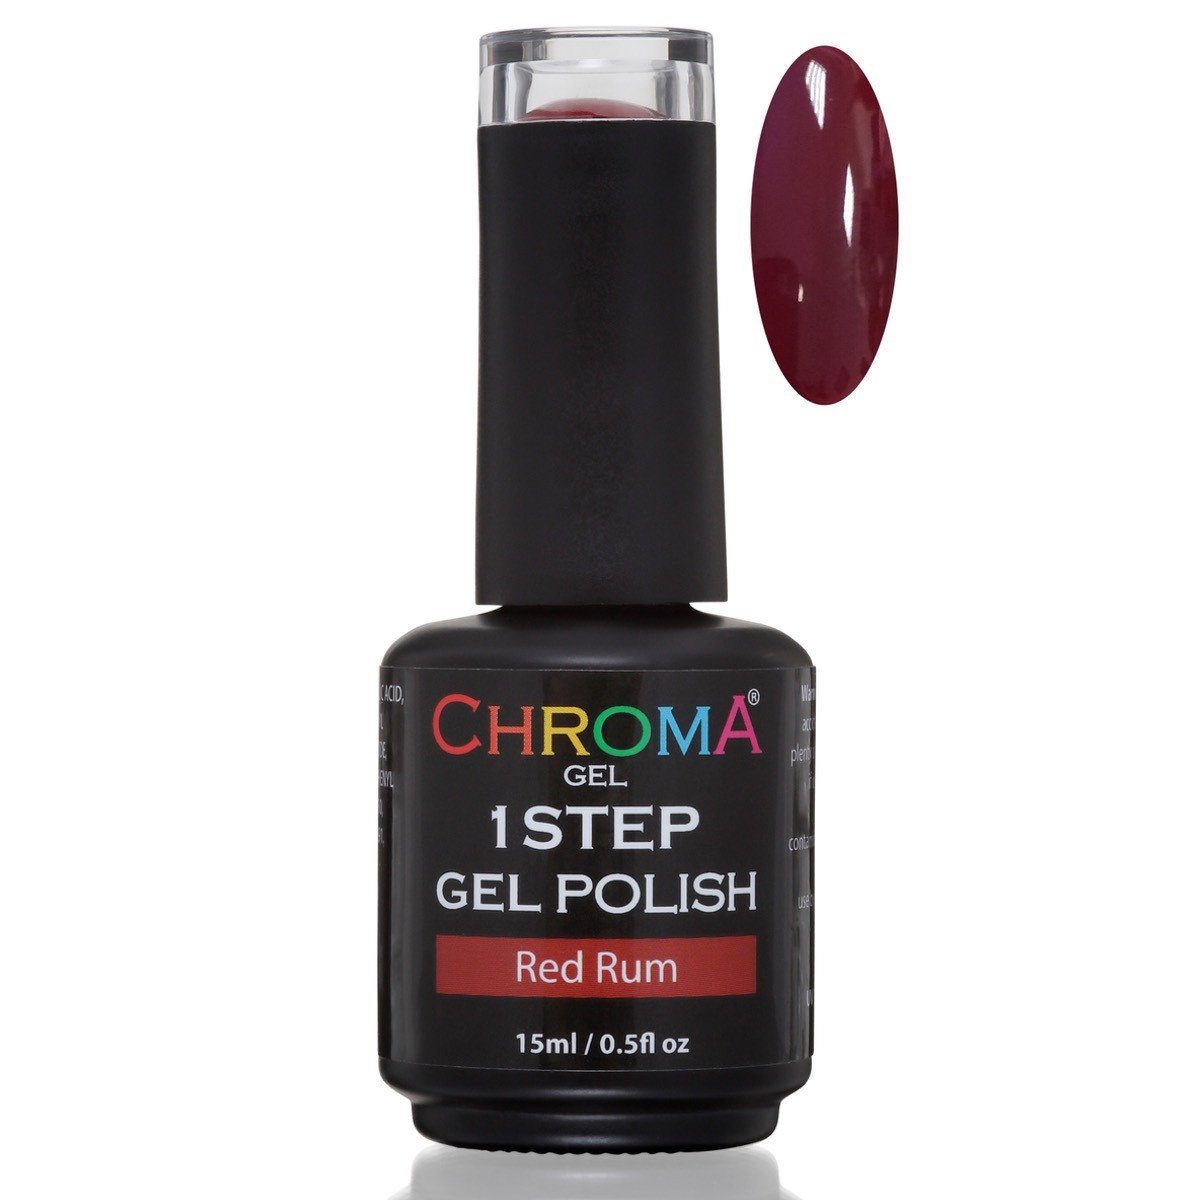 Chroma Gel 1 Step Gel Polish Red Rum No.31 - Beauty Hair Products LtdChroma Gel